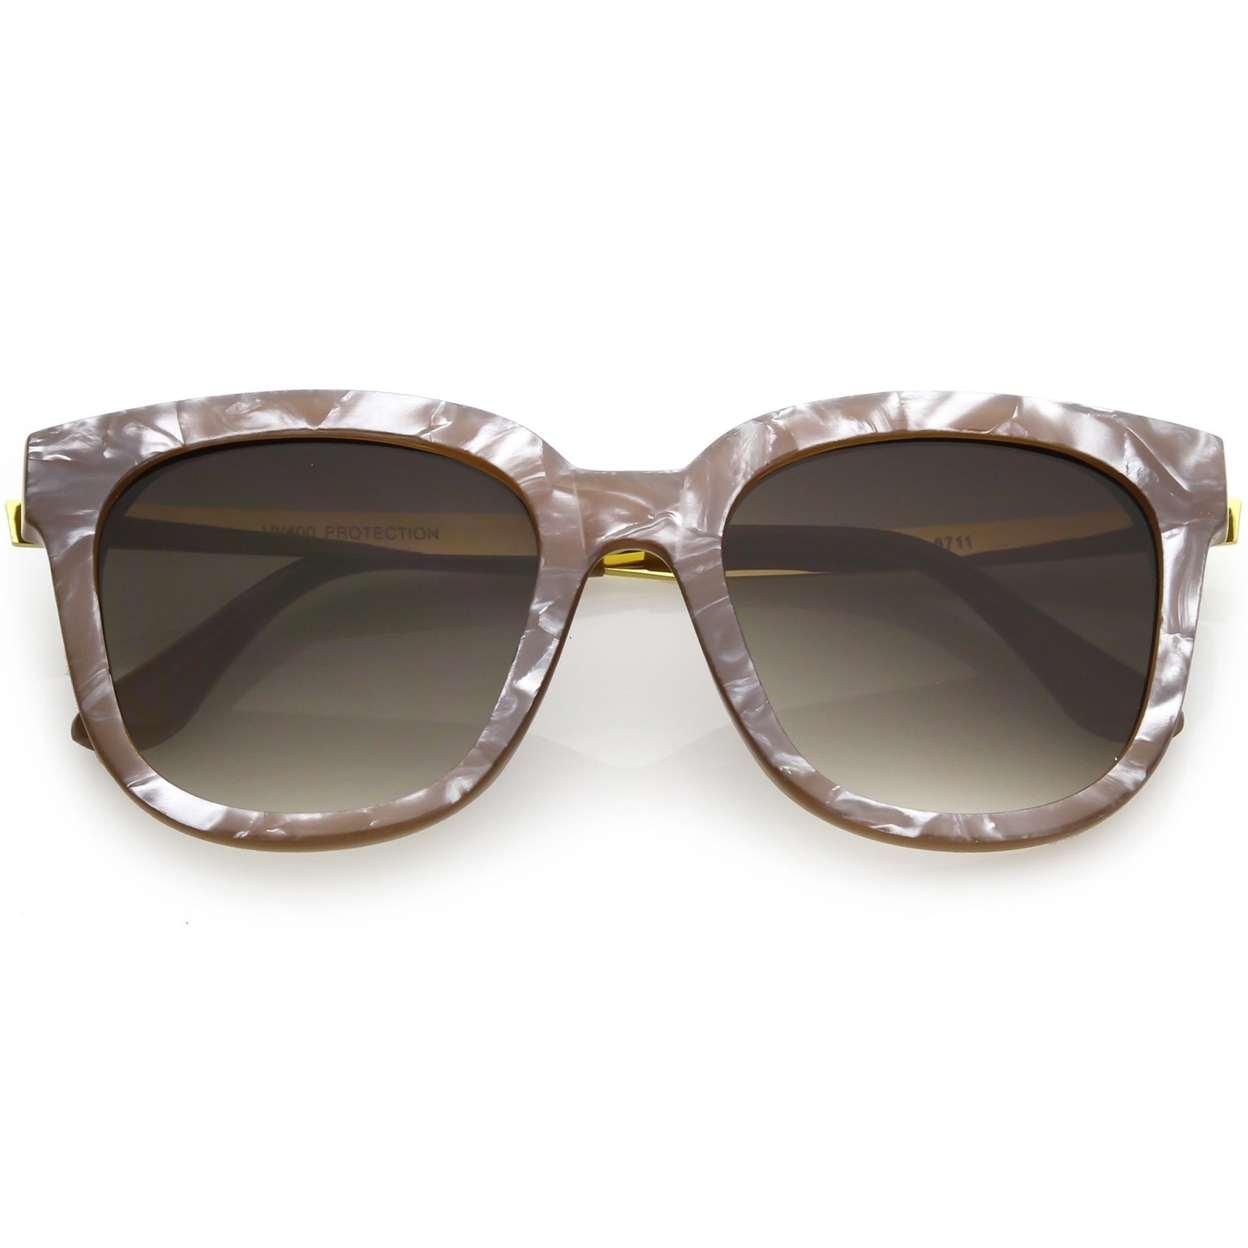 Modern Marble Print Square Sunglasses Horn Rimmed Round Gradient Lens 53mm - Grey / Lavender